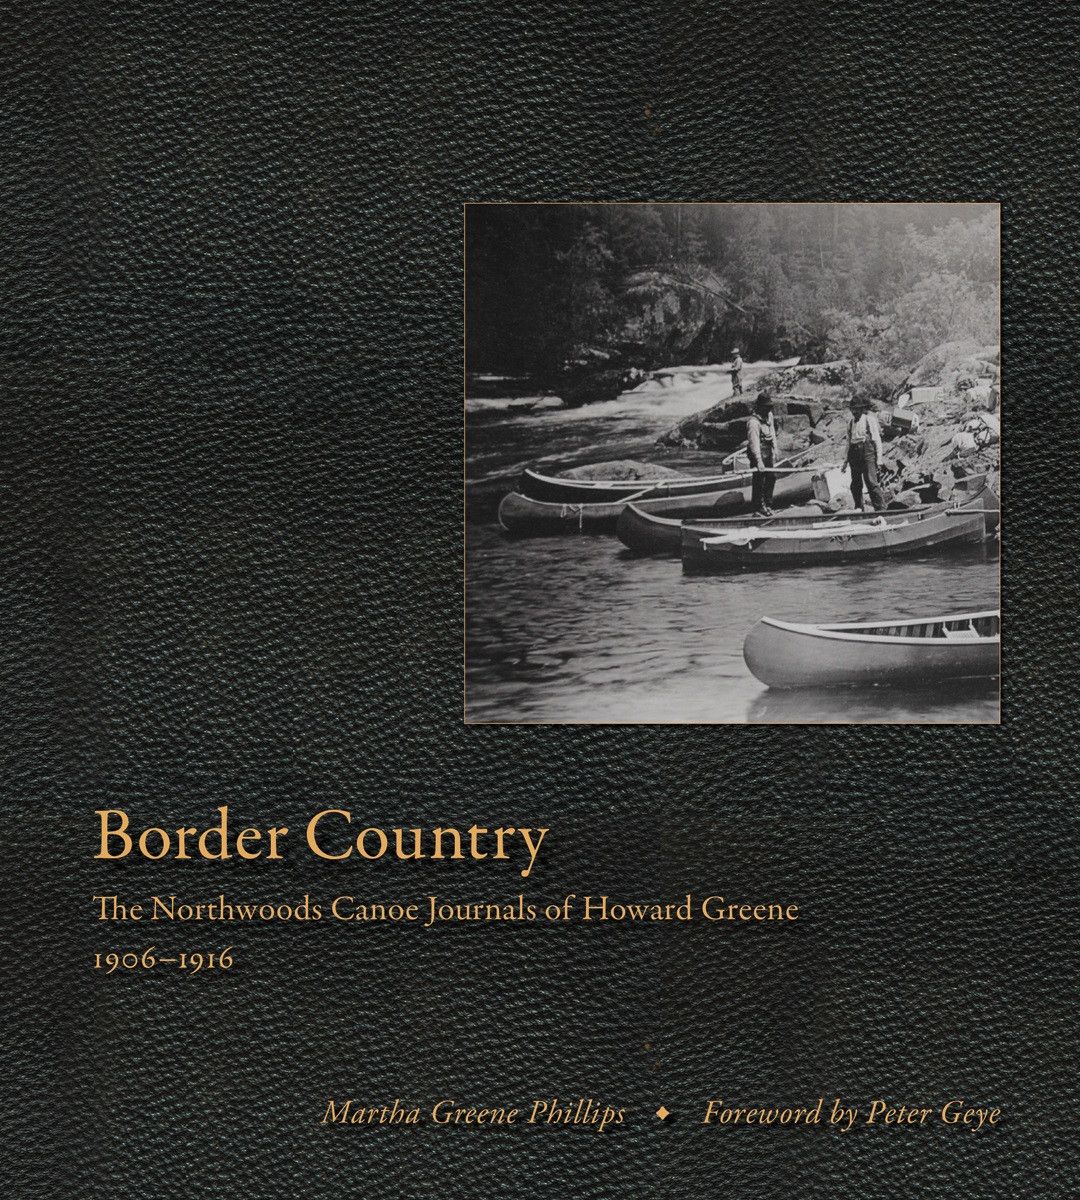 Northwoods Canoe Journals book cover